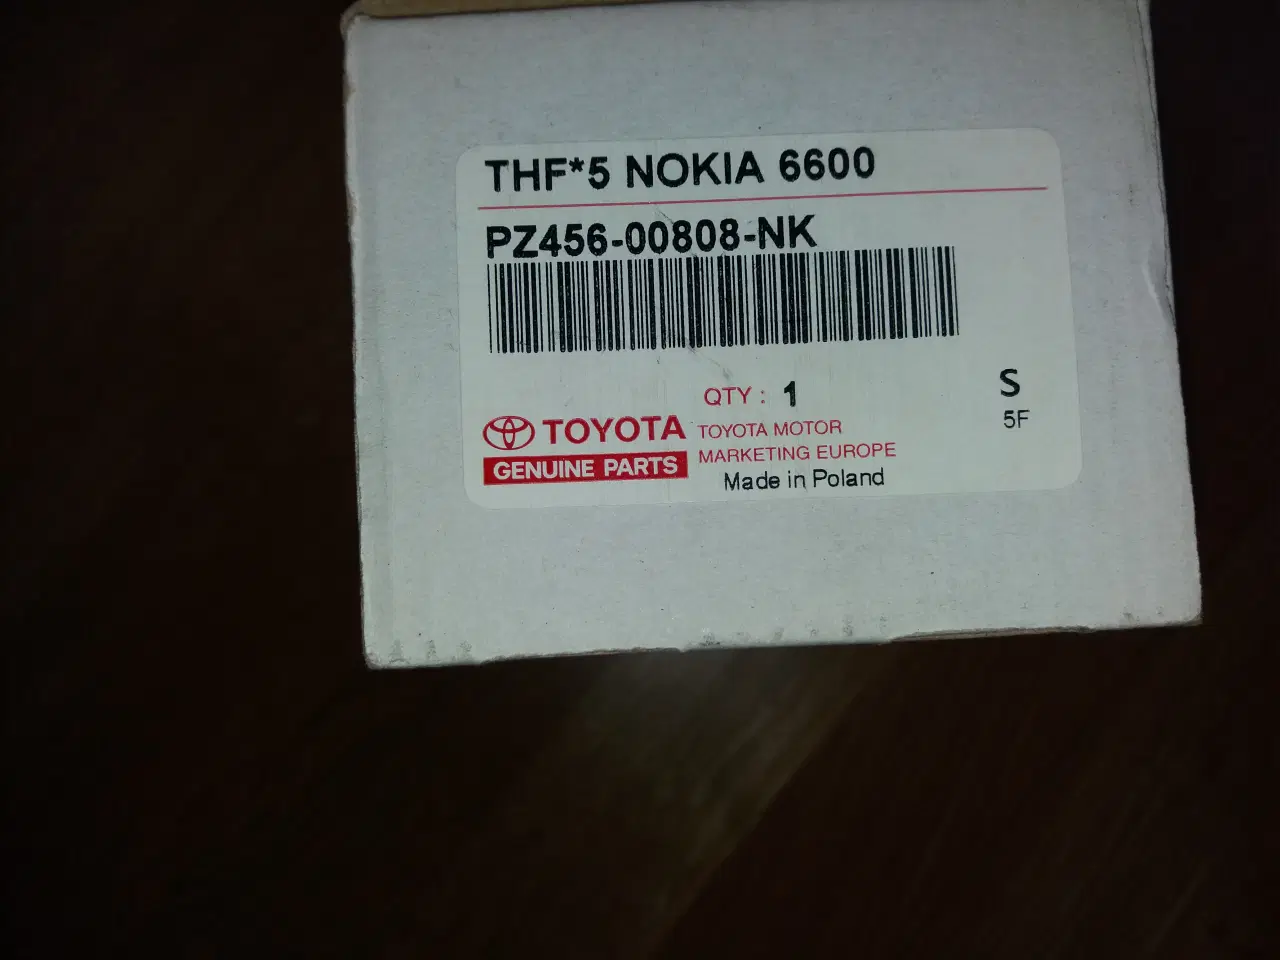 Billede 3 - Telefon kit   Toyota